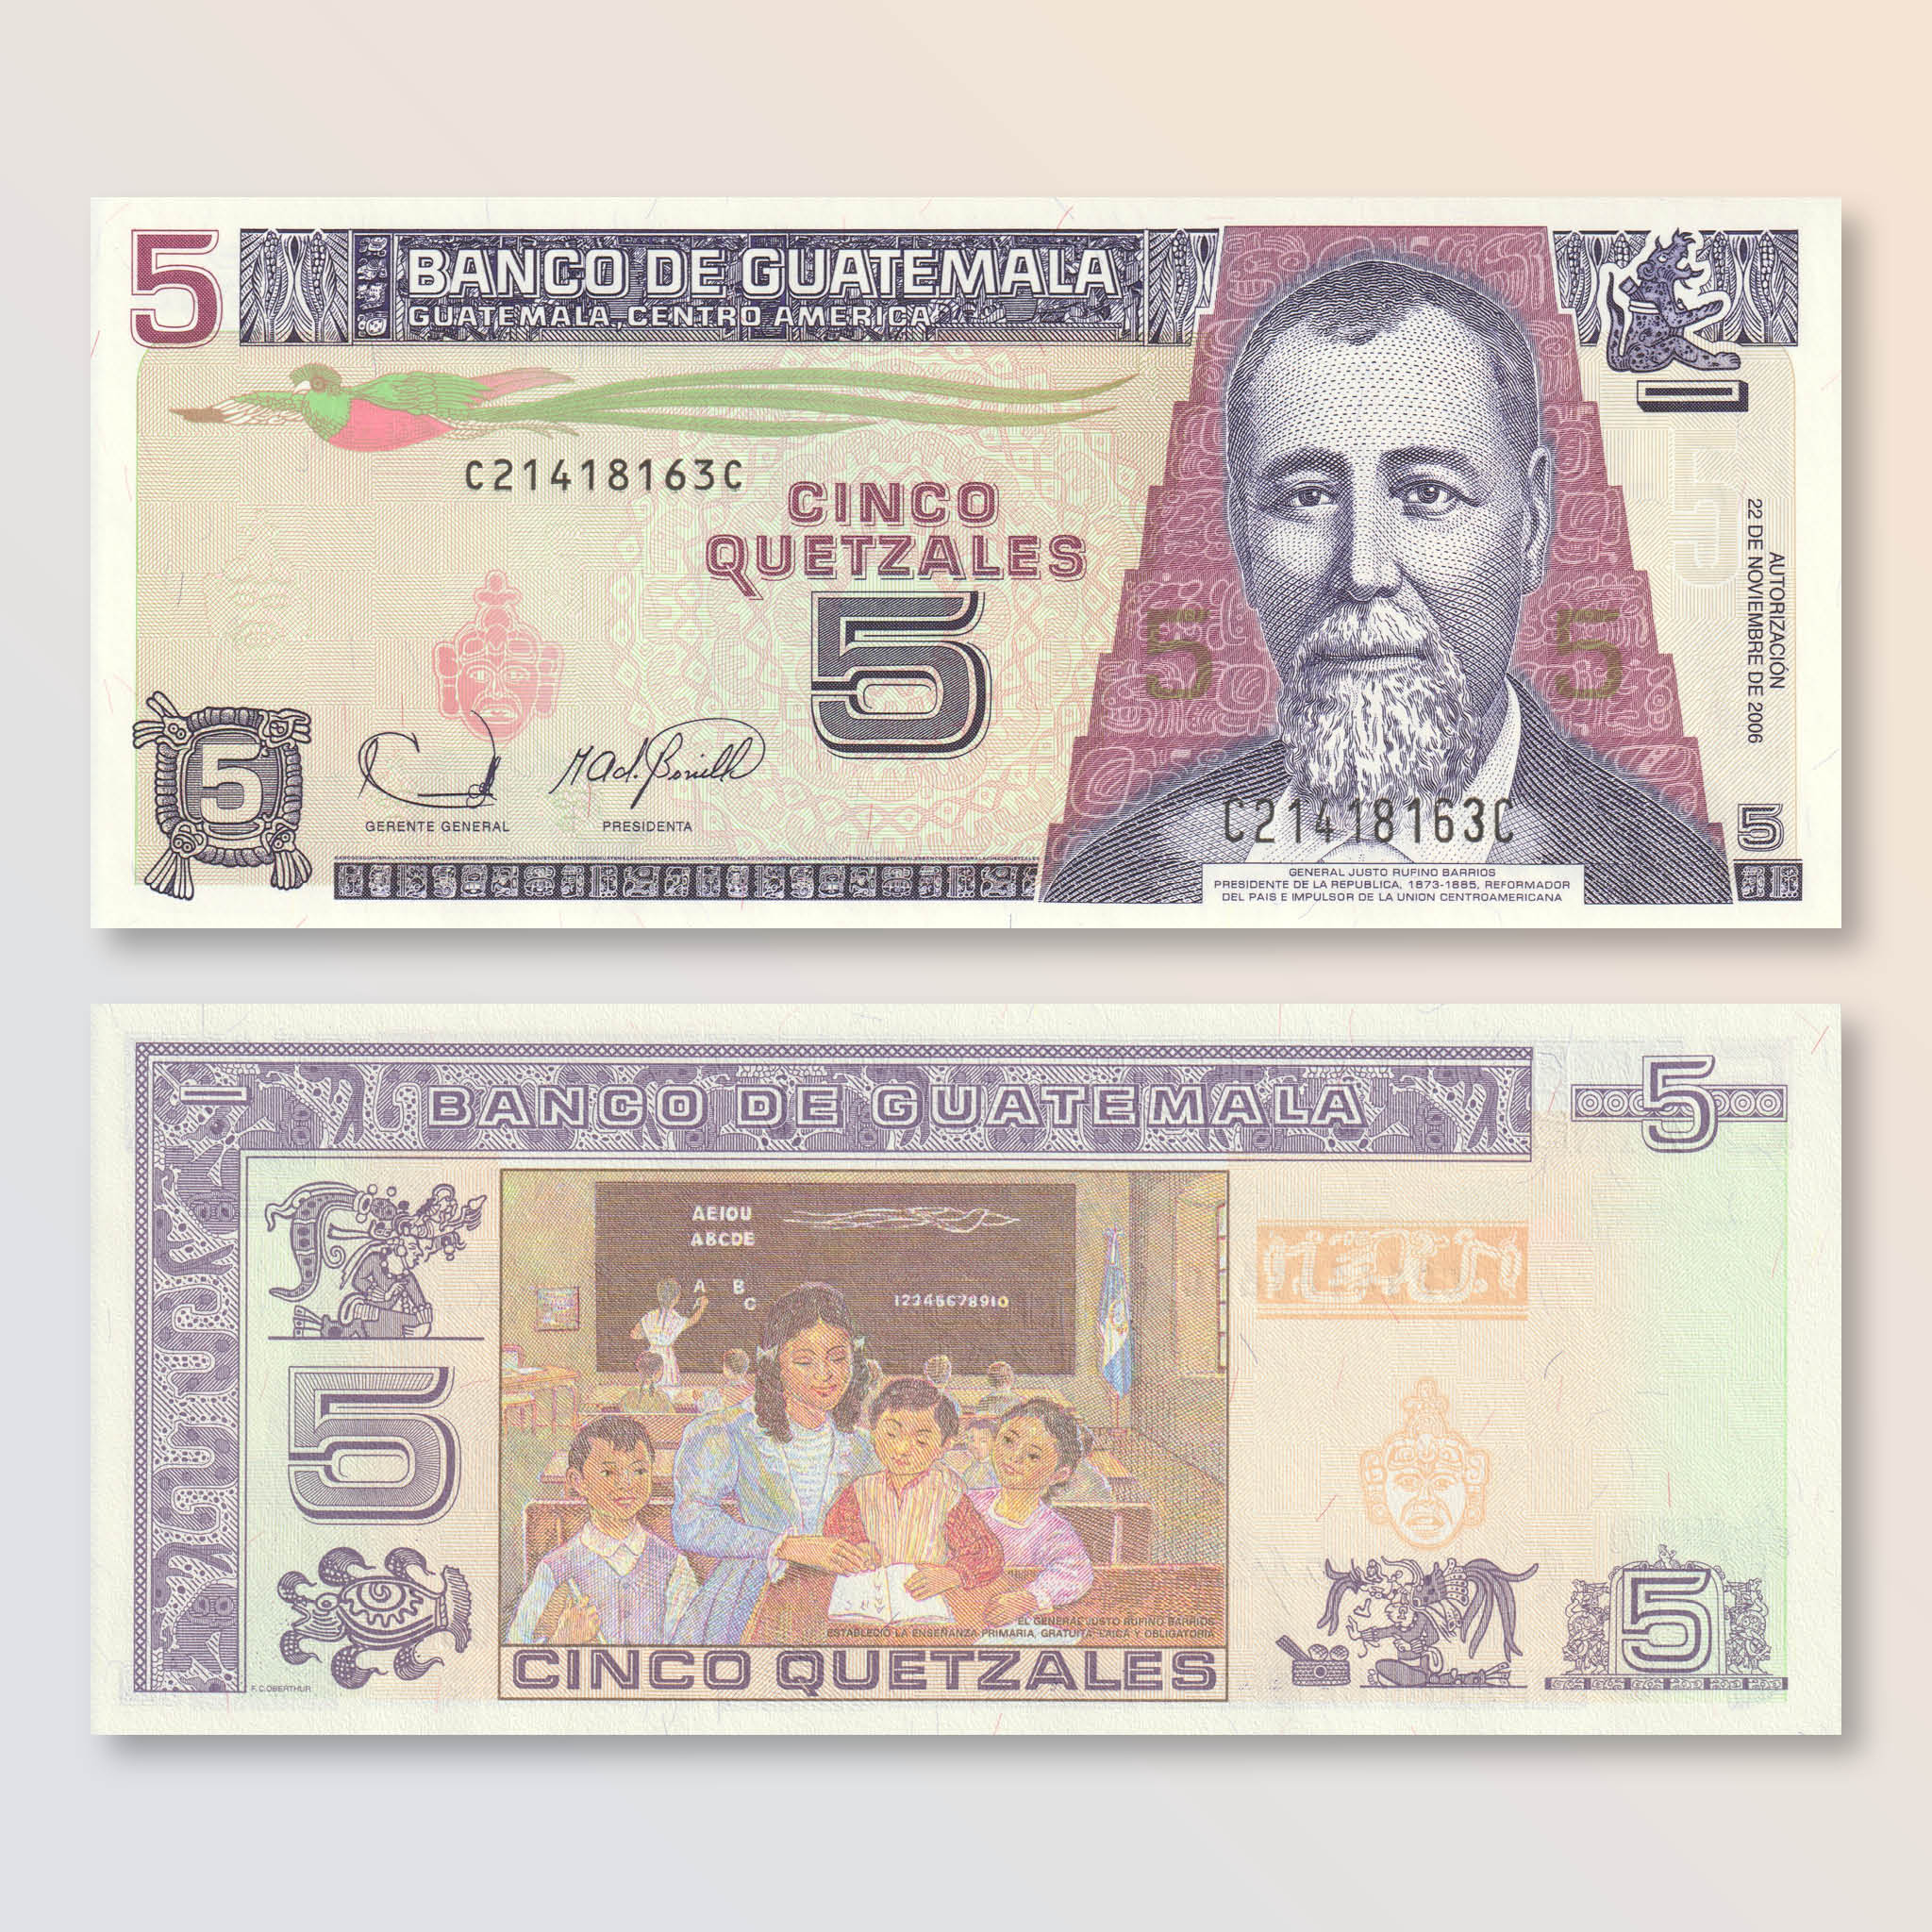 Guatemala 5 Quetzales, 2020, B605d, UNC - Robert's World Money - World Banknotes